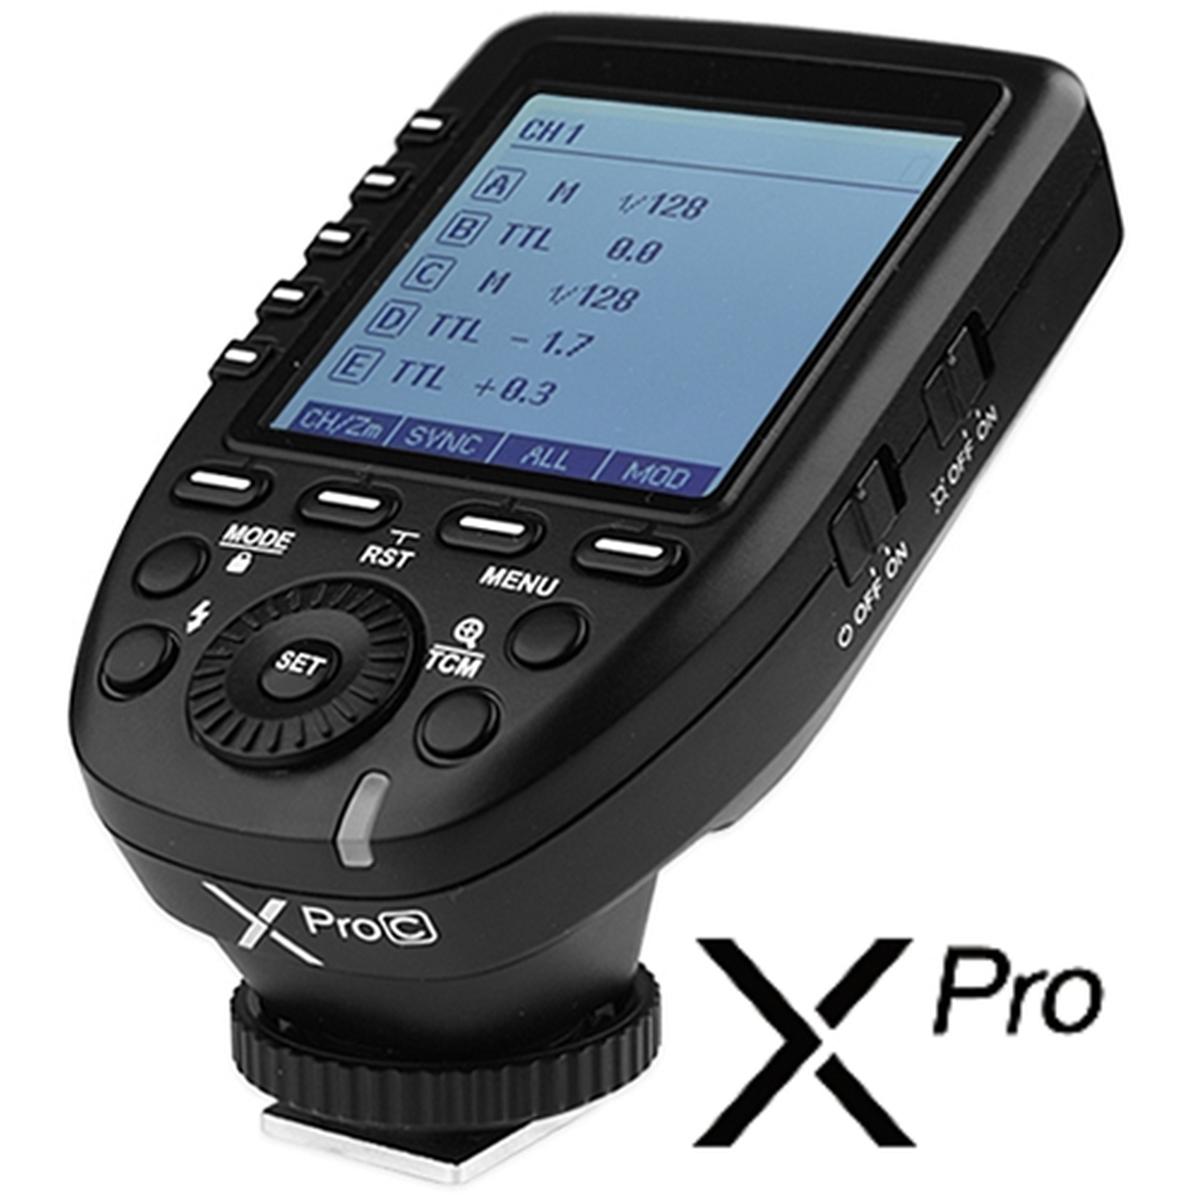 Trasmettitore Godox Xpro-S Ttl Sony-Trigger- radiocomando